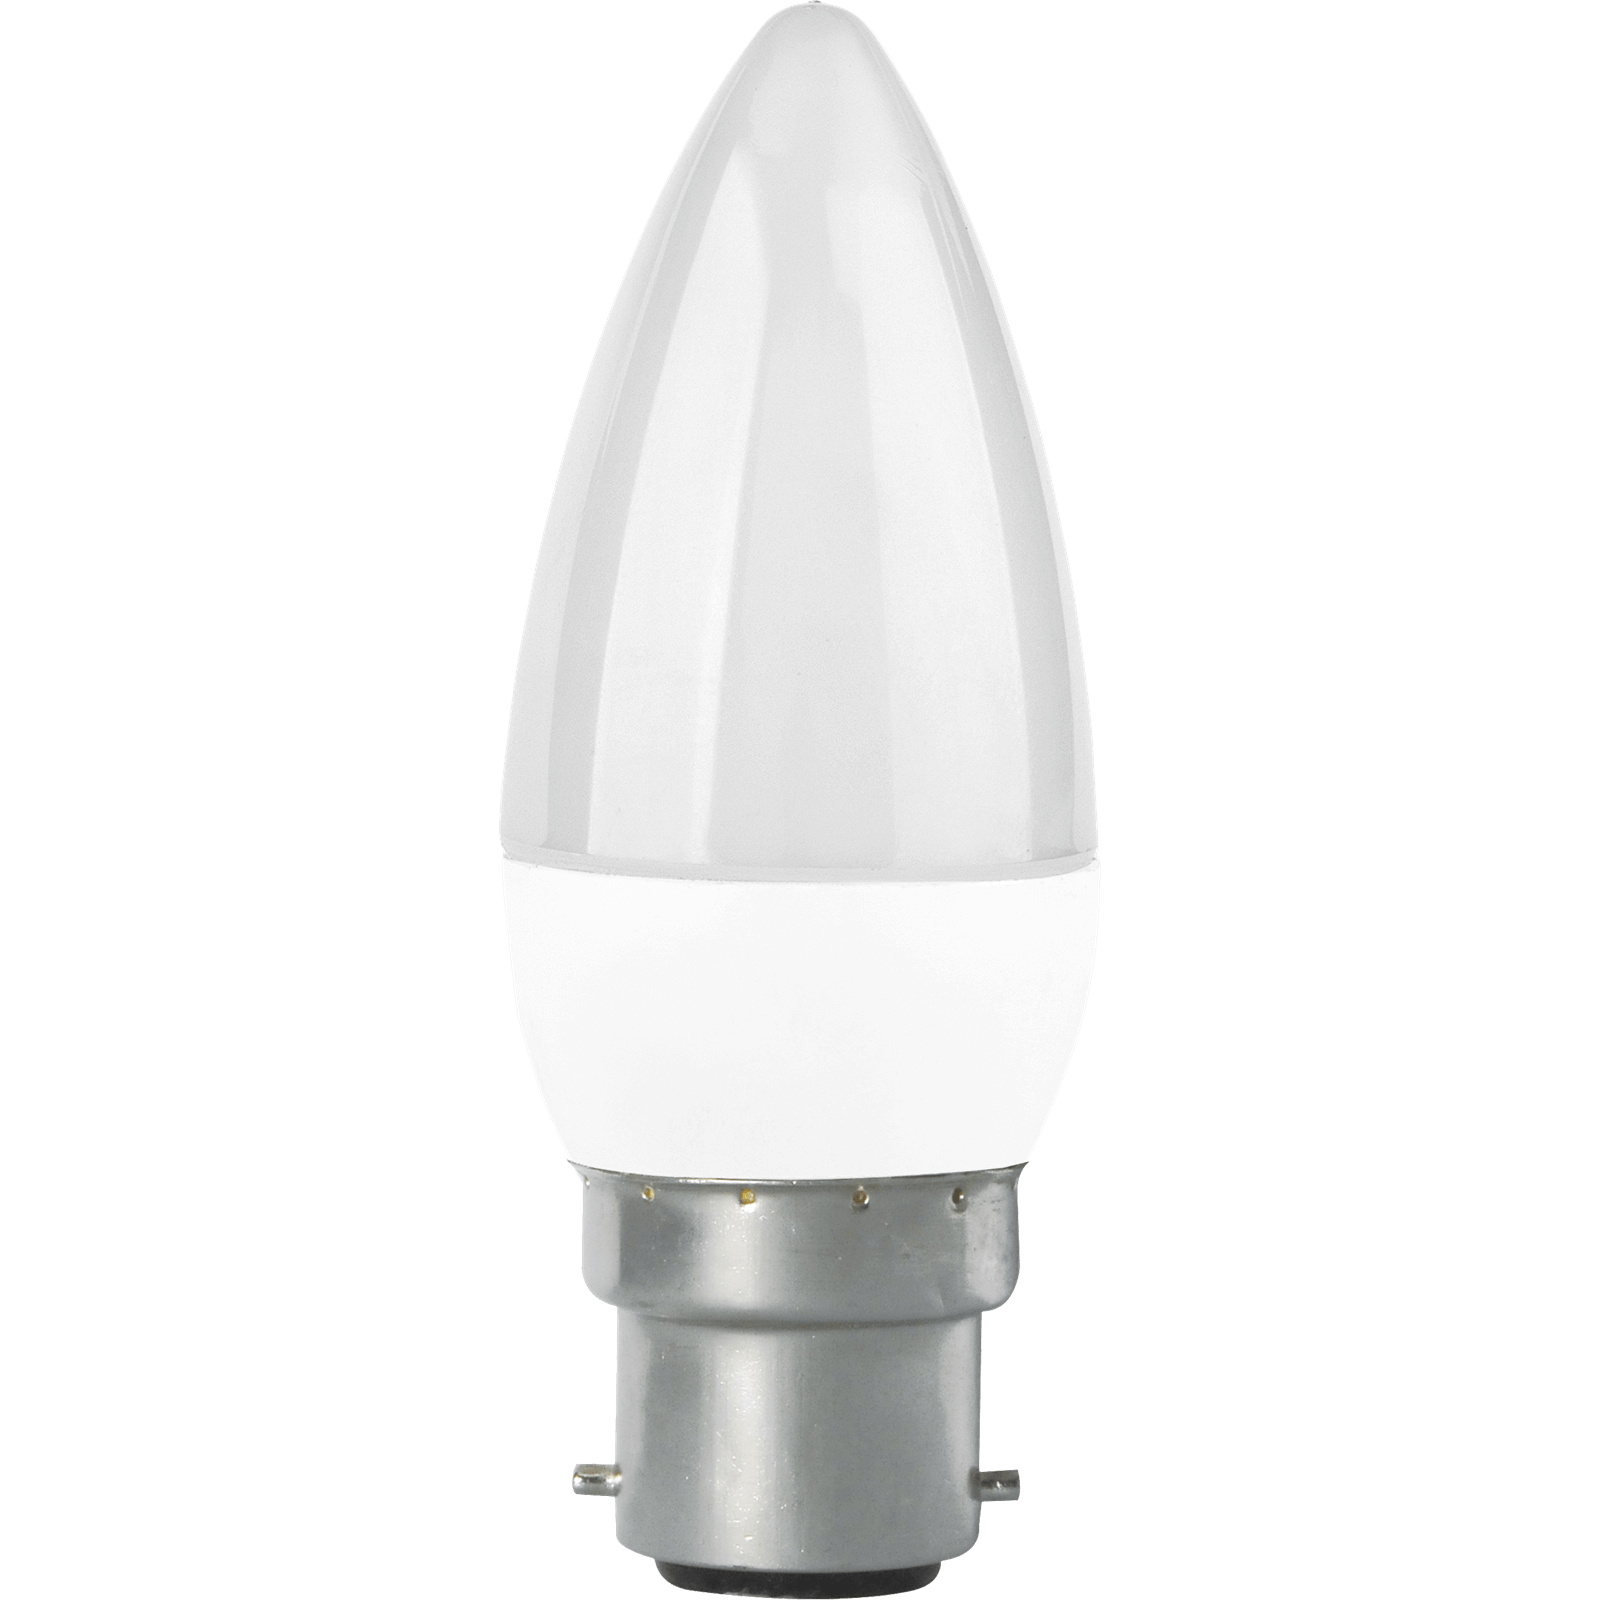 Photo of Tcp Led Candle 40w Bc Warm Light Bulb - 2 Pack